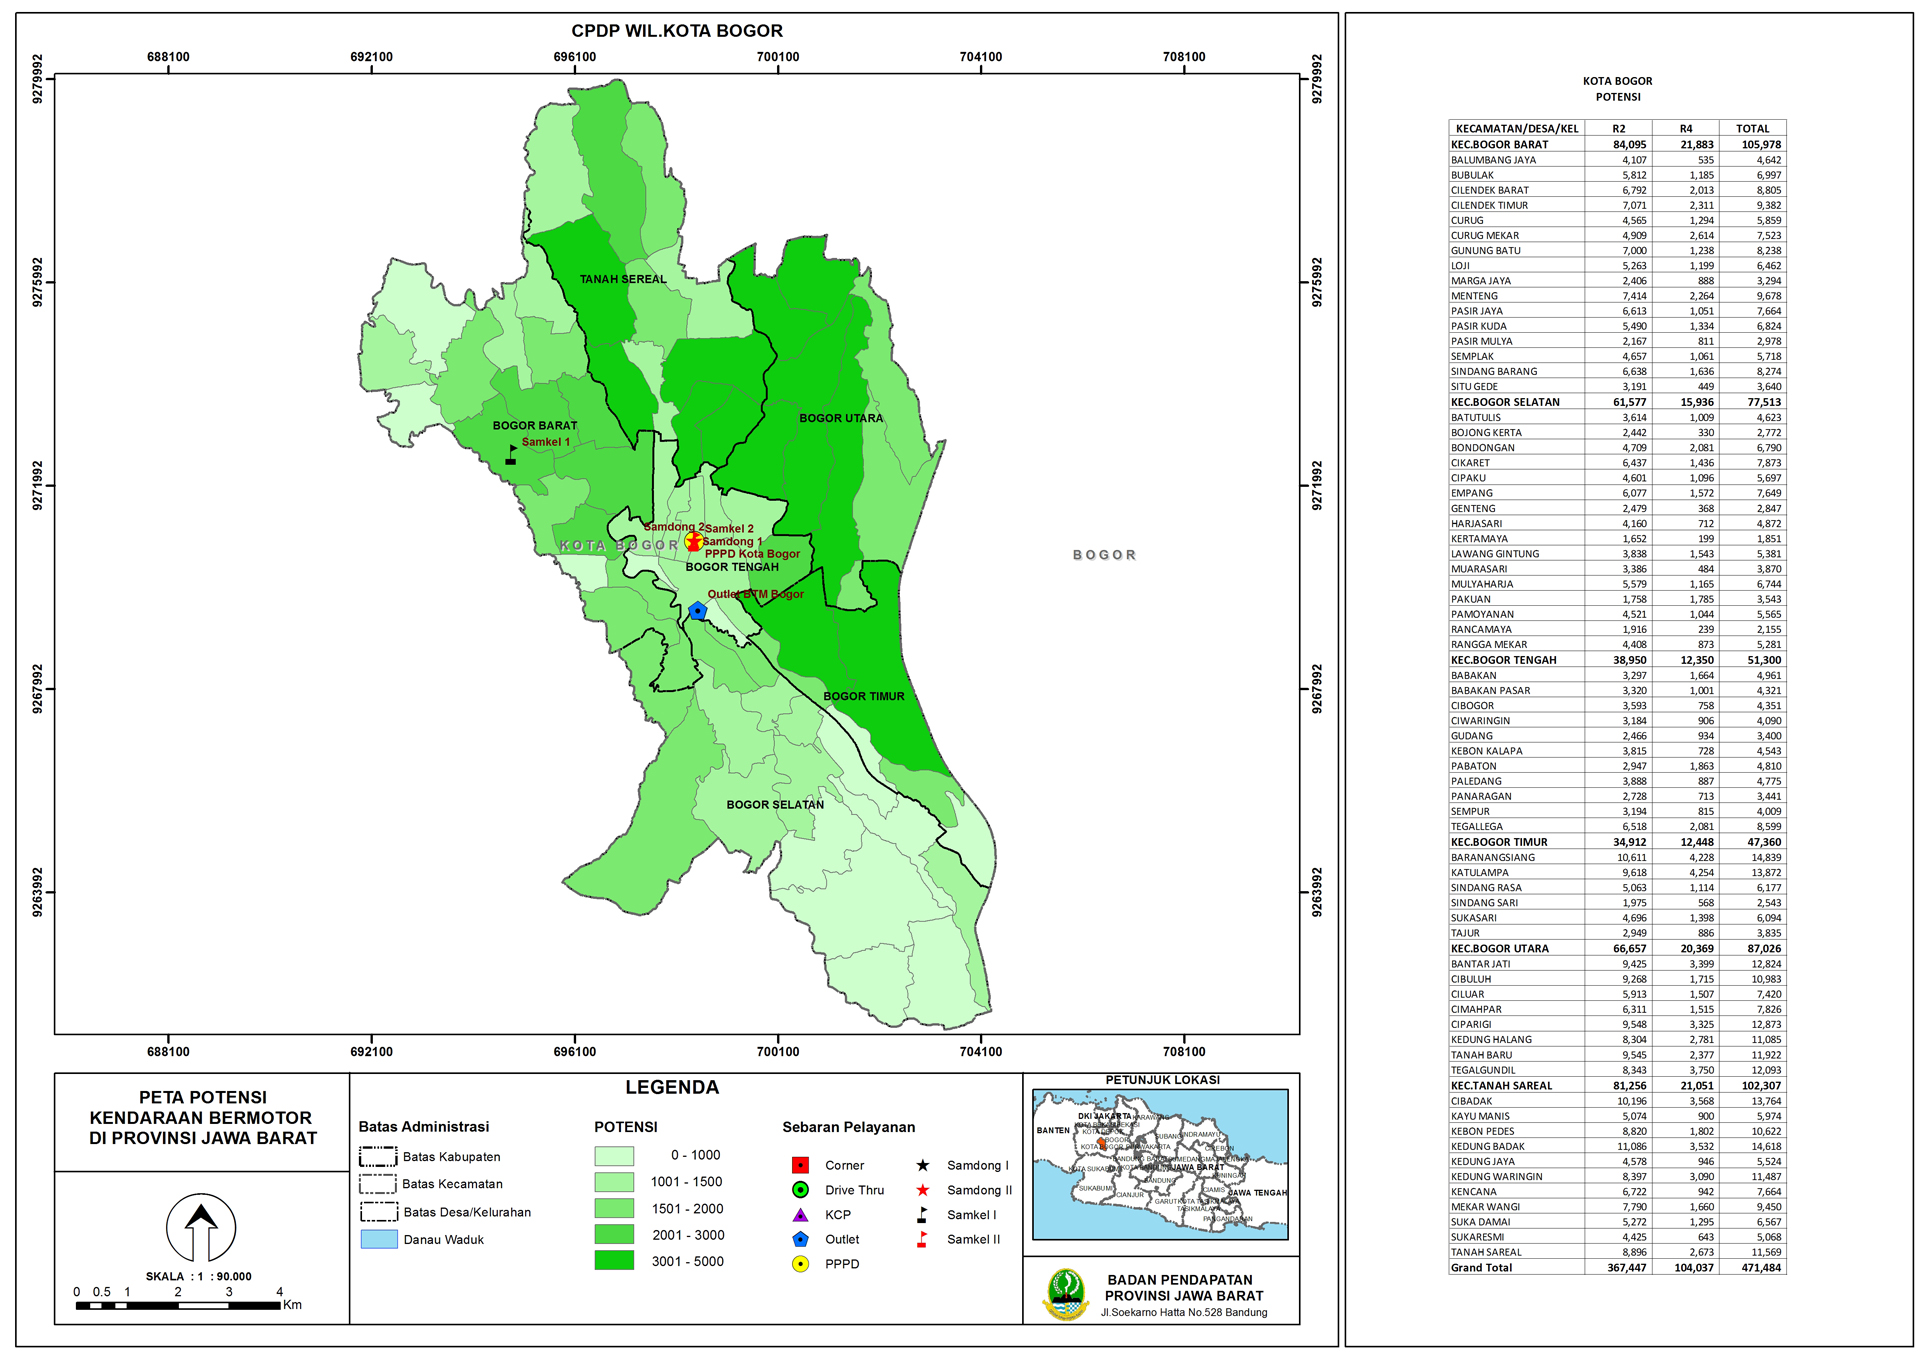 Peta Potensi Kendaraan Bermotor Cabang Kota Bogor 